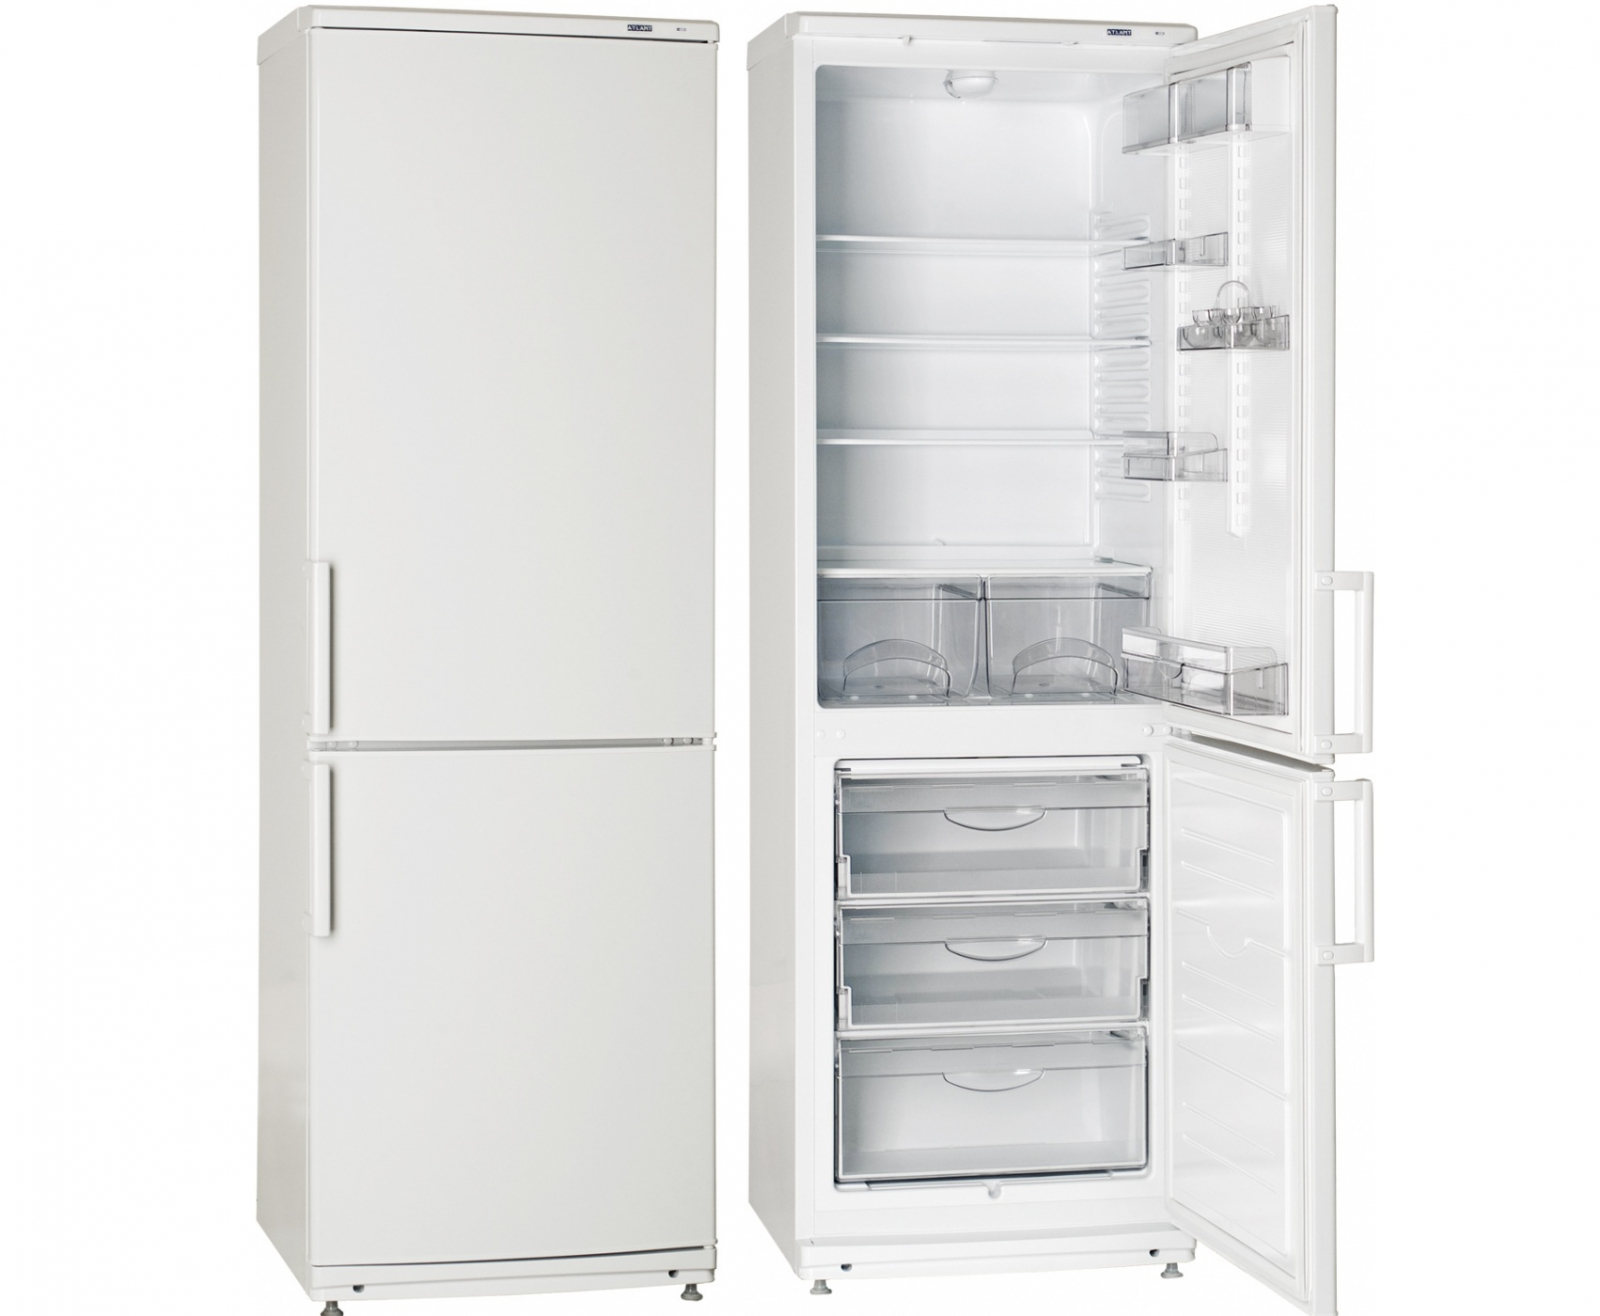 холодильник atlant xm 4021-000, купить в Красноярске холодильник atlant xm 4021-000,  купить в Красноярске дешево холодильник atlant xm 4021-000, купить в Красноярске минимальной цене холодильник atlant xm 4021-000